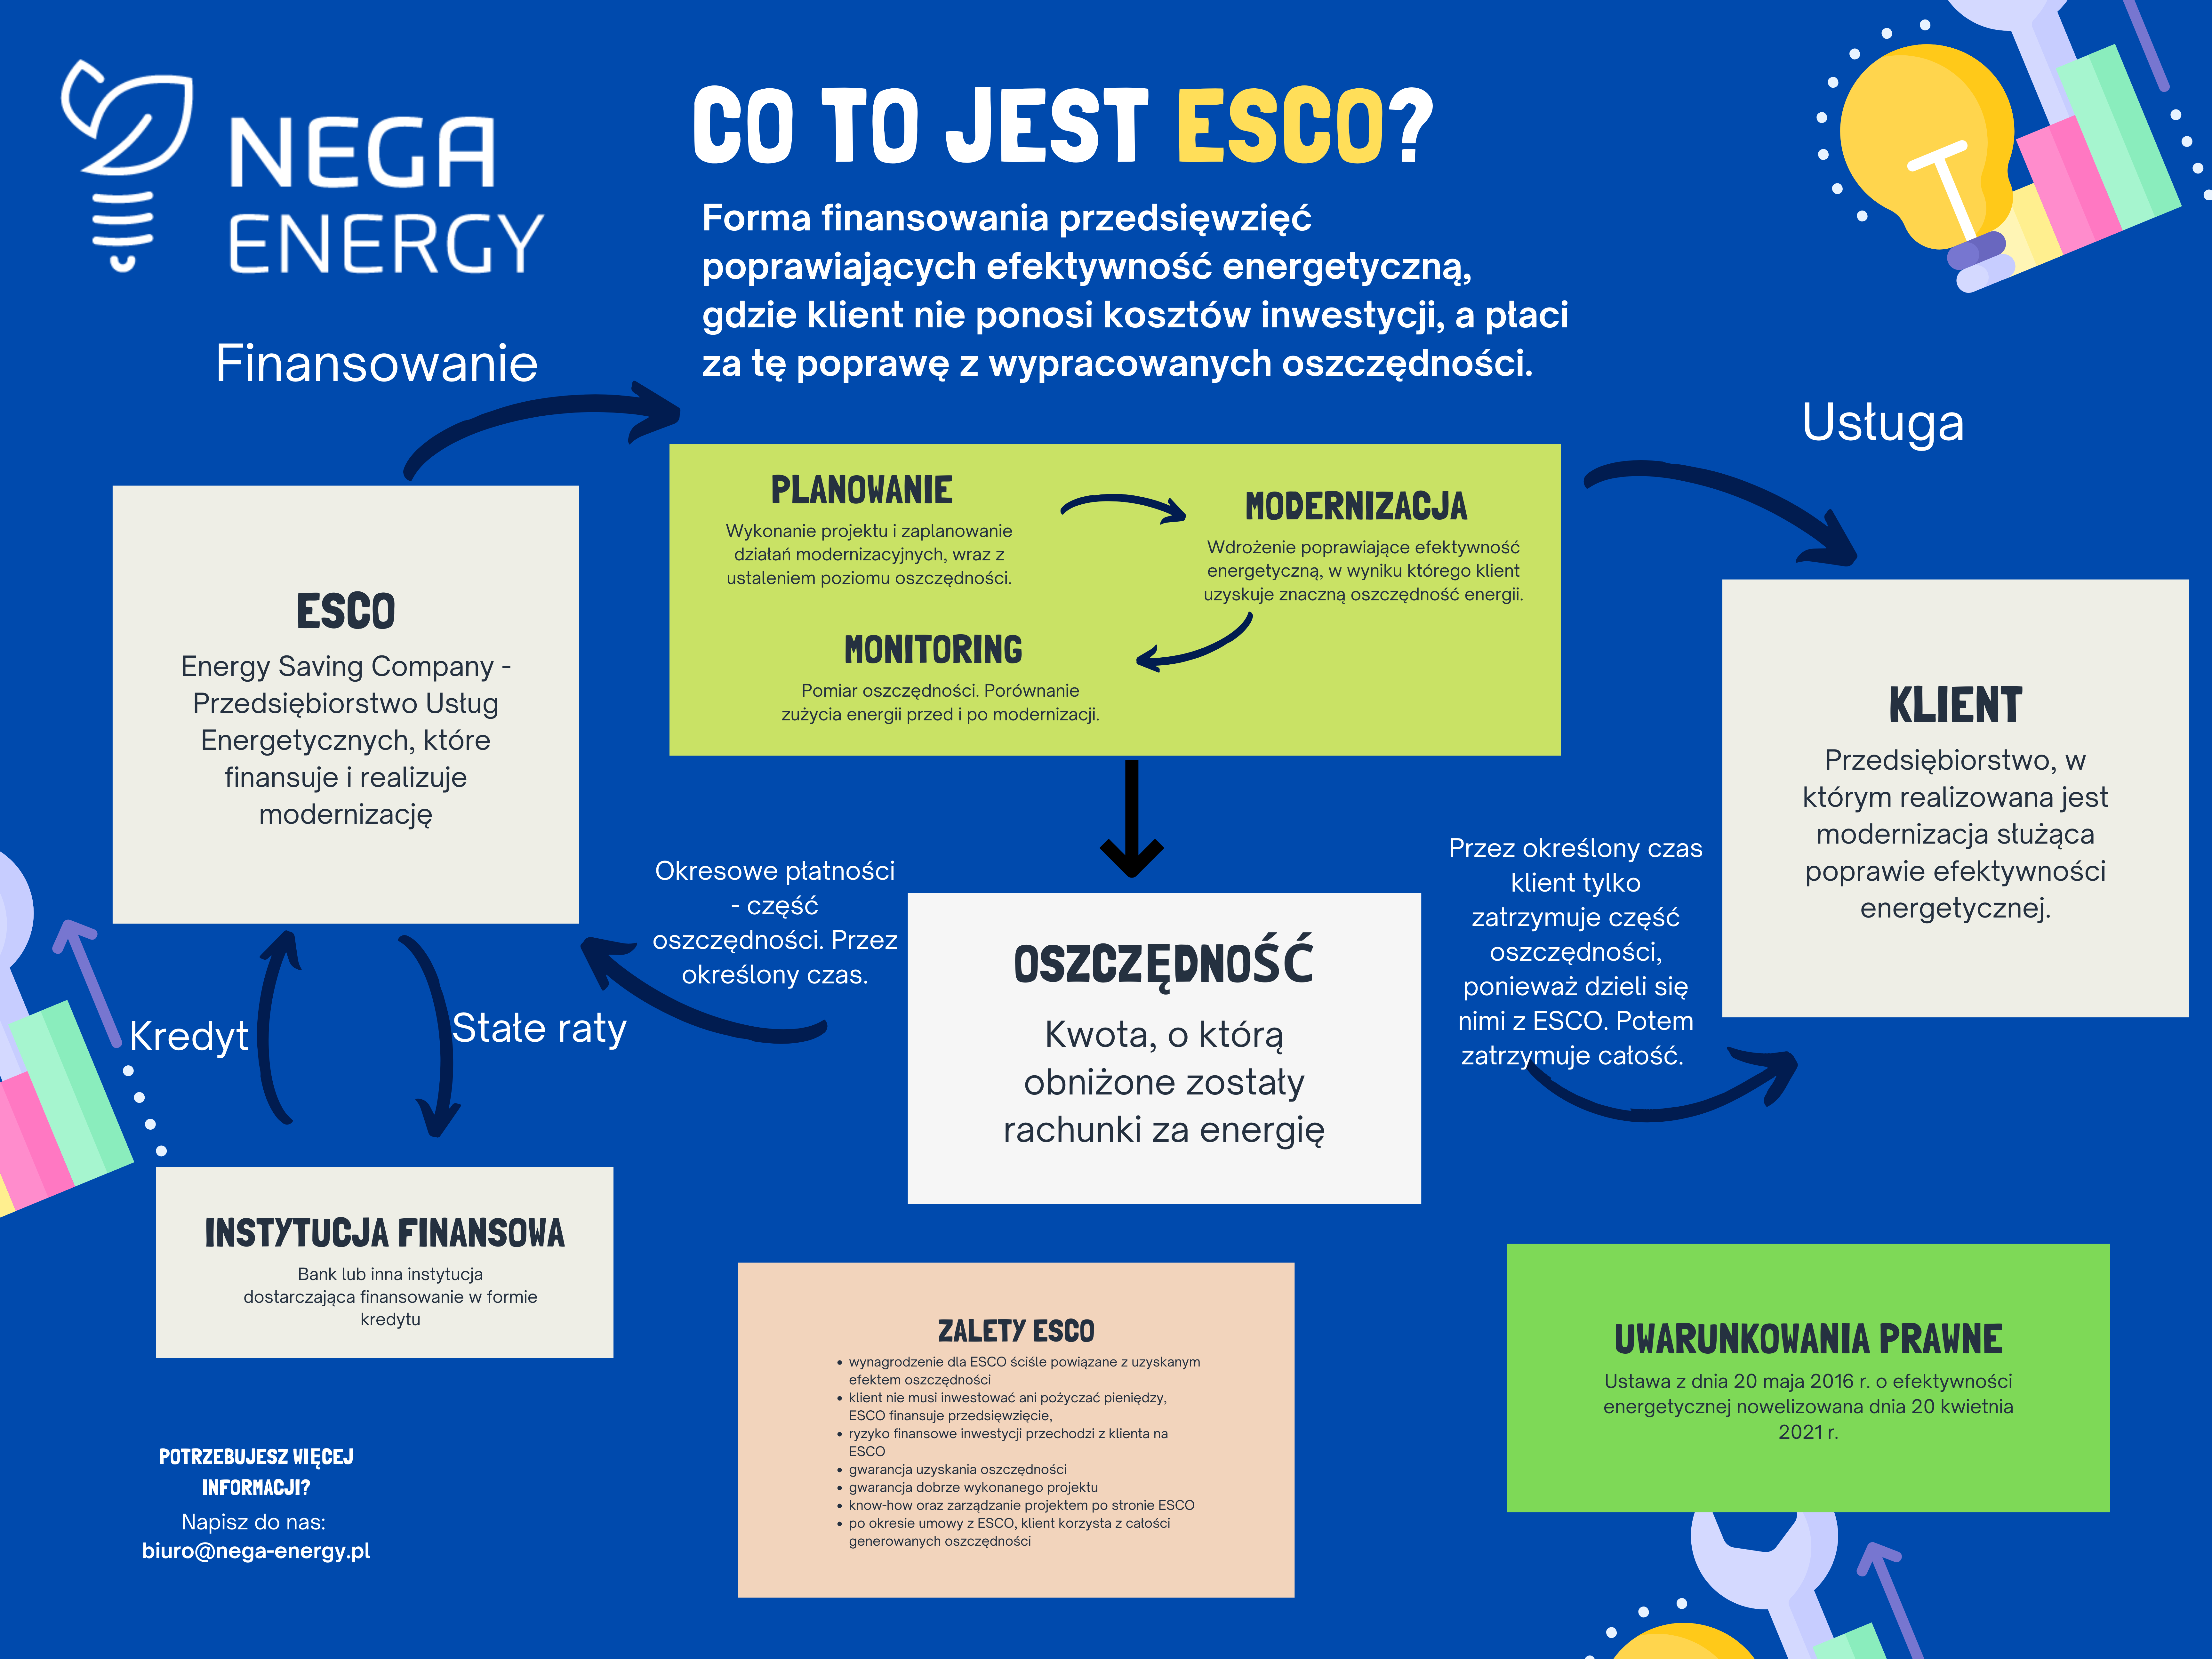 NEGA-Energy - Co to jest ESCO?